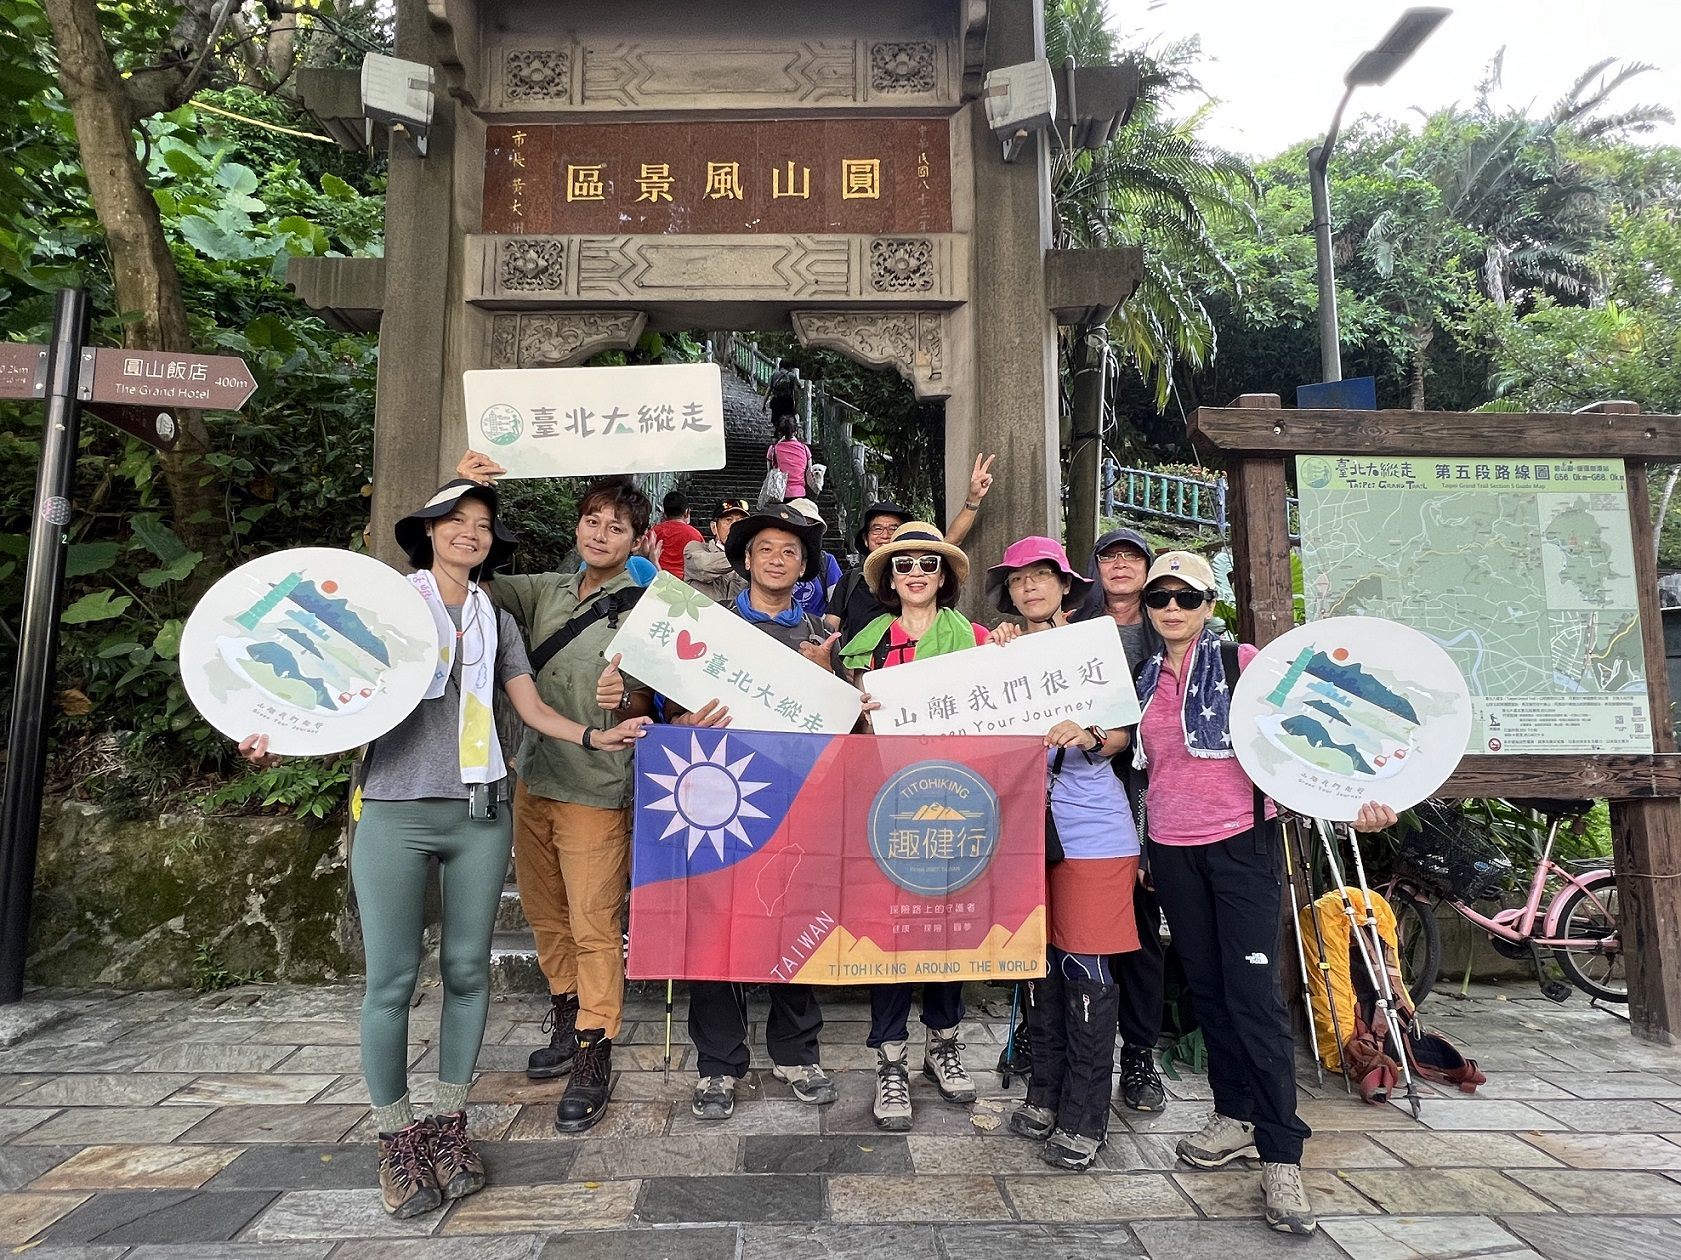 Participants take a group photo on their trip along Taipei Grand Trail